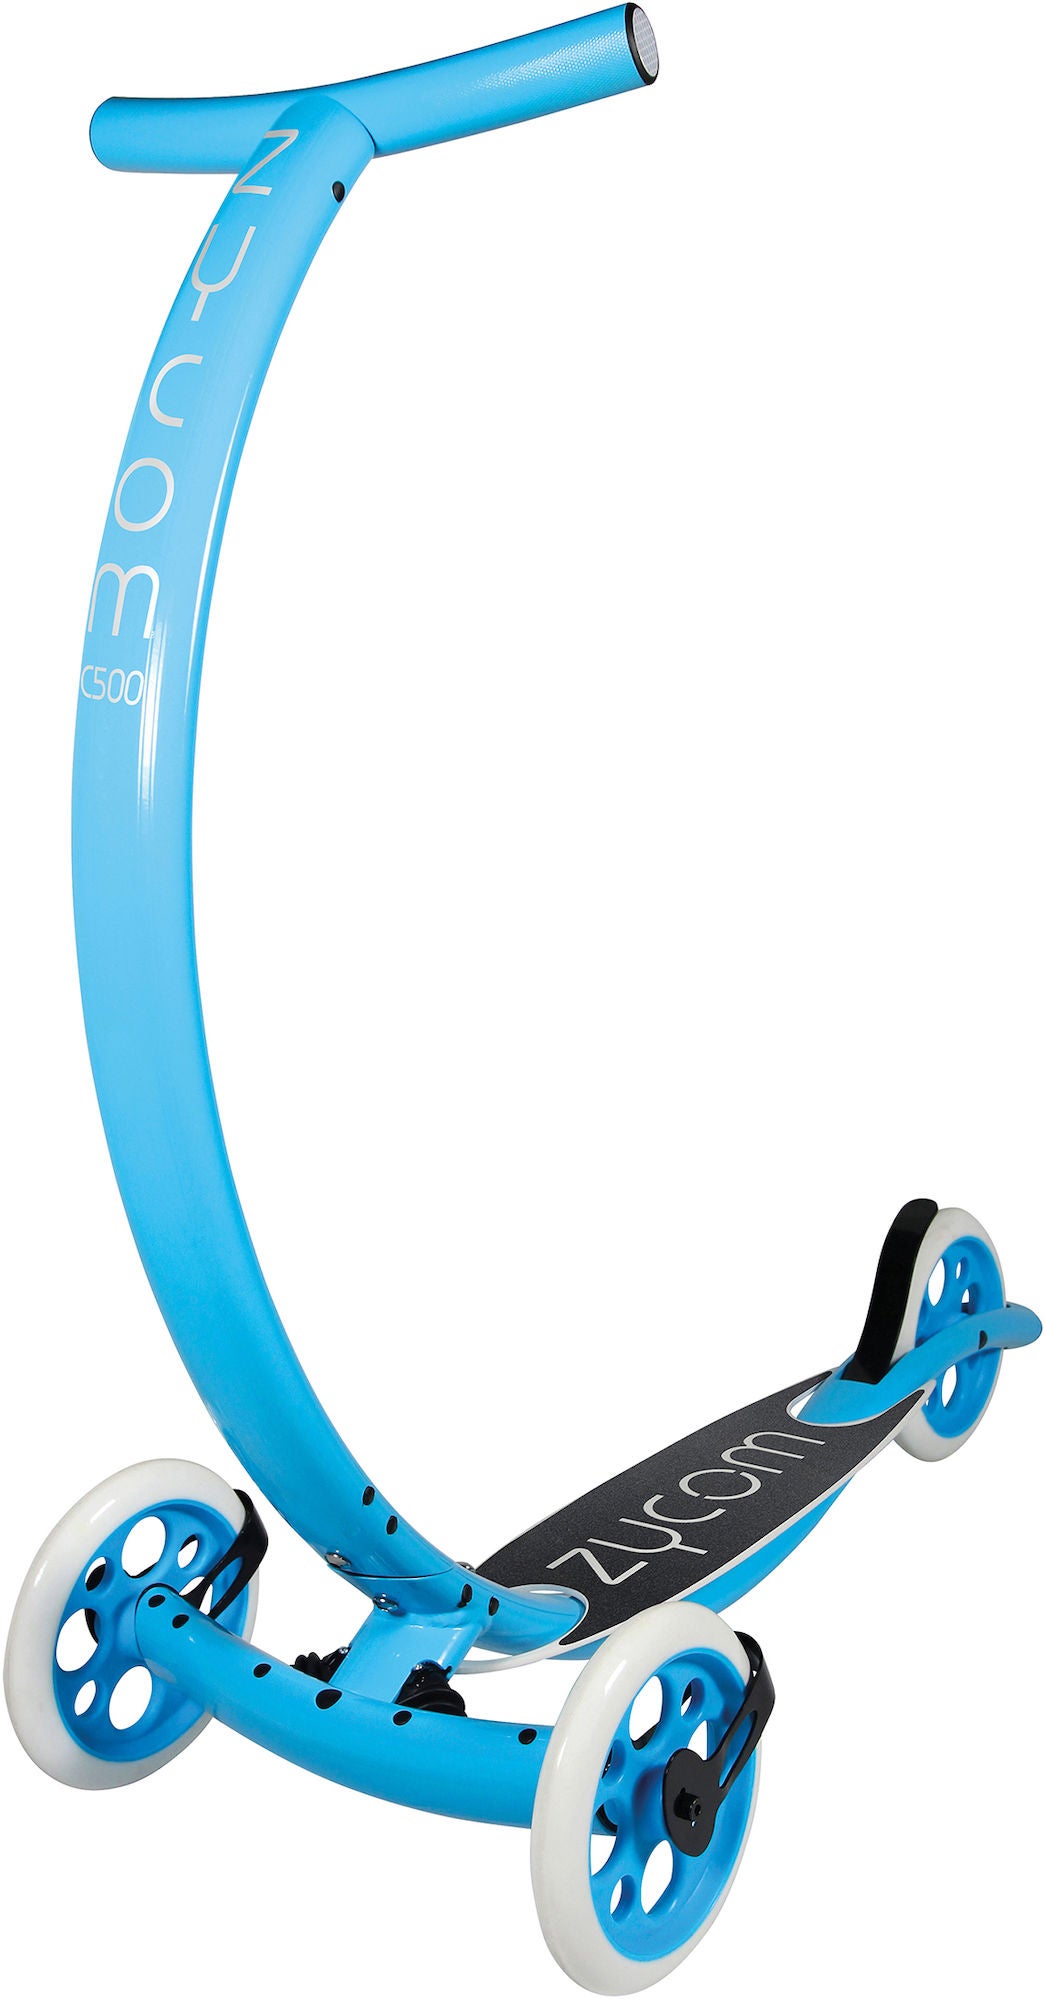 Zycom Roller C500, Blau/Weiß von Zycom